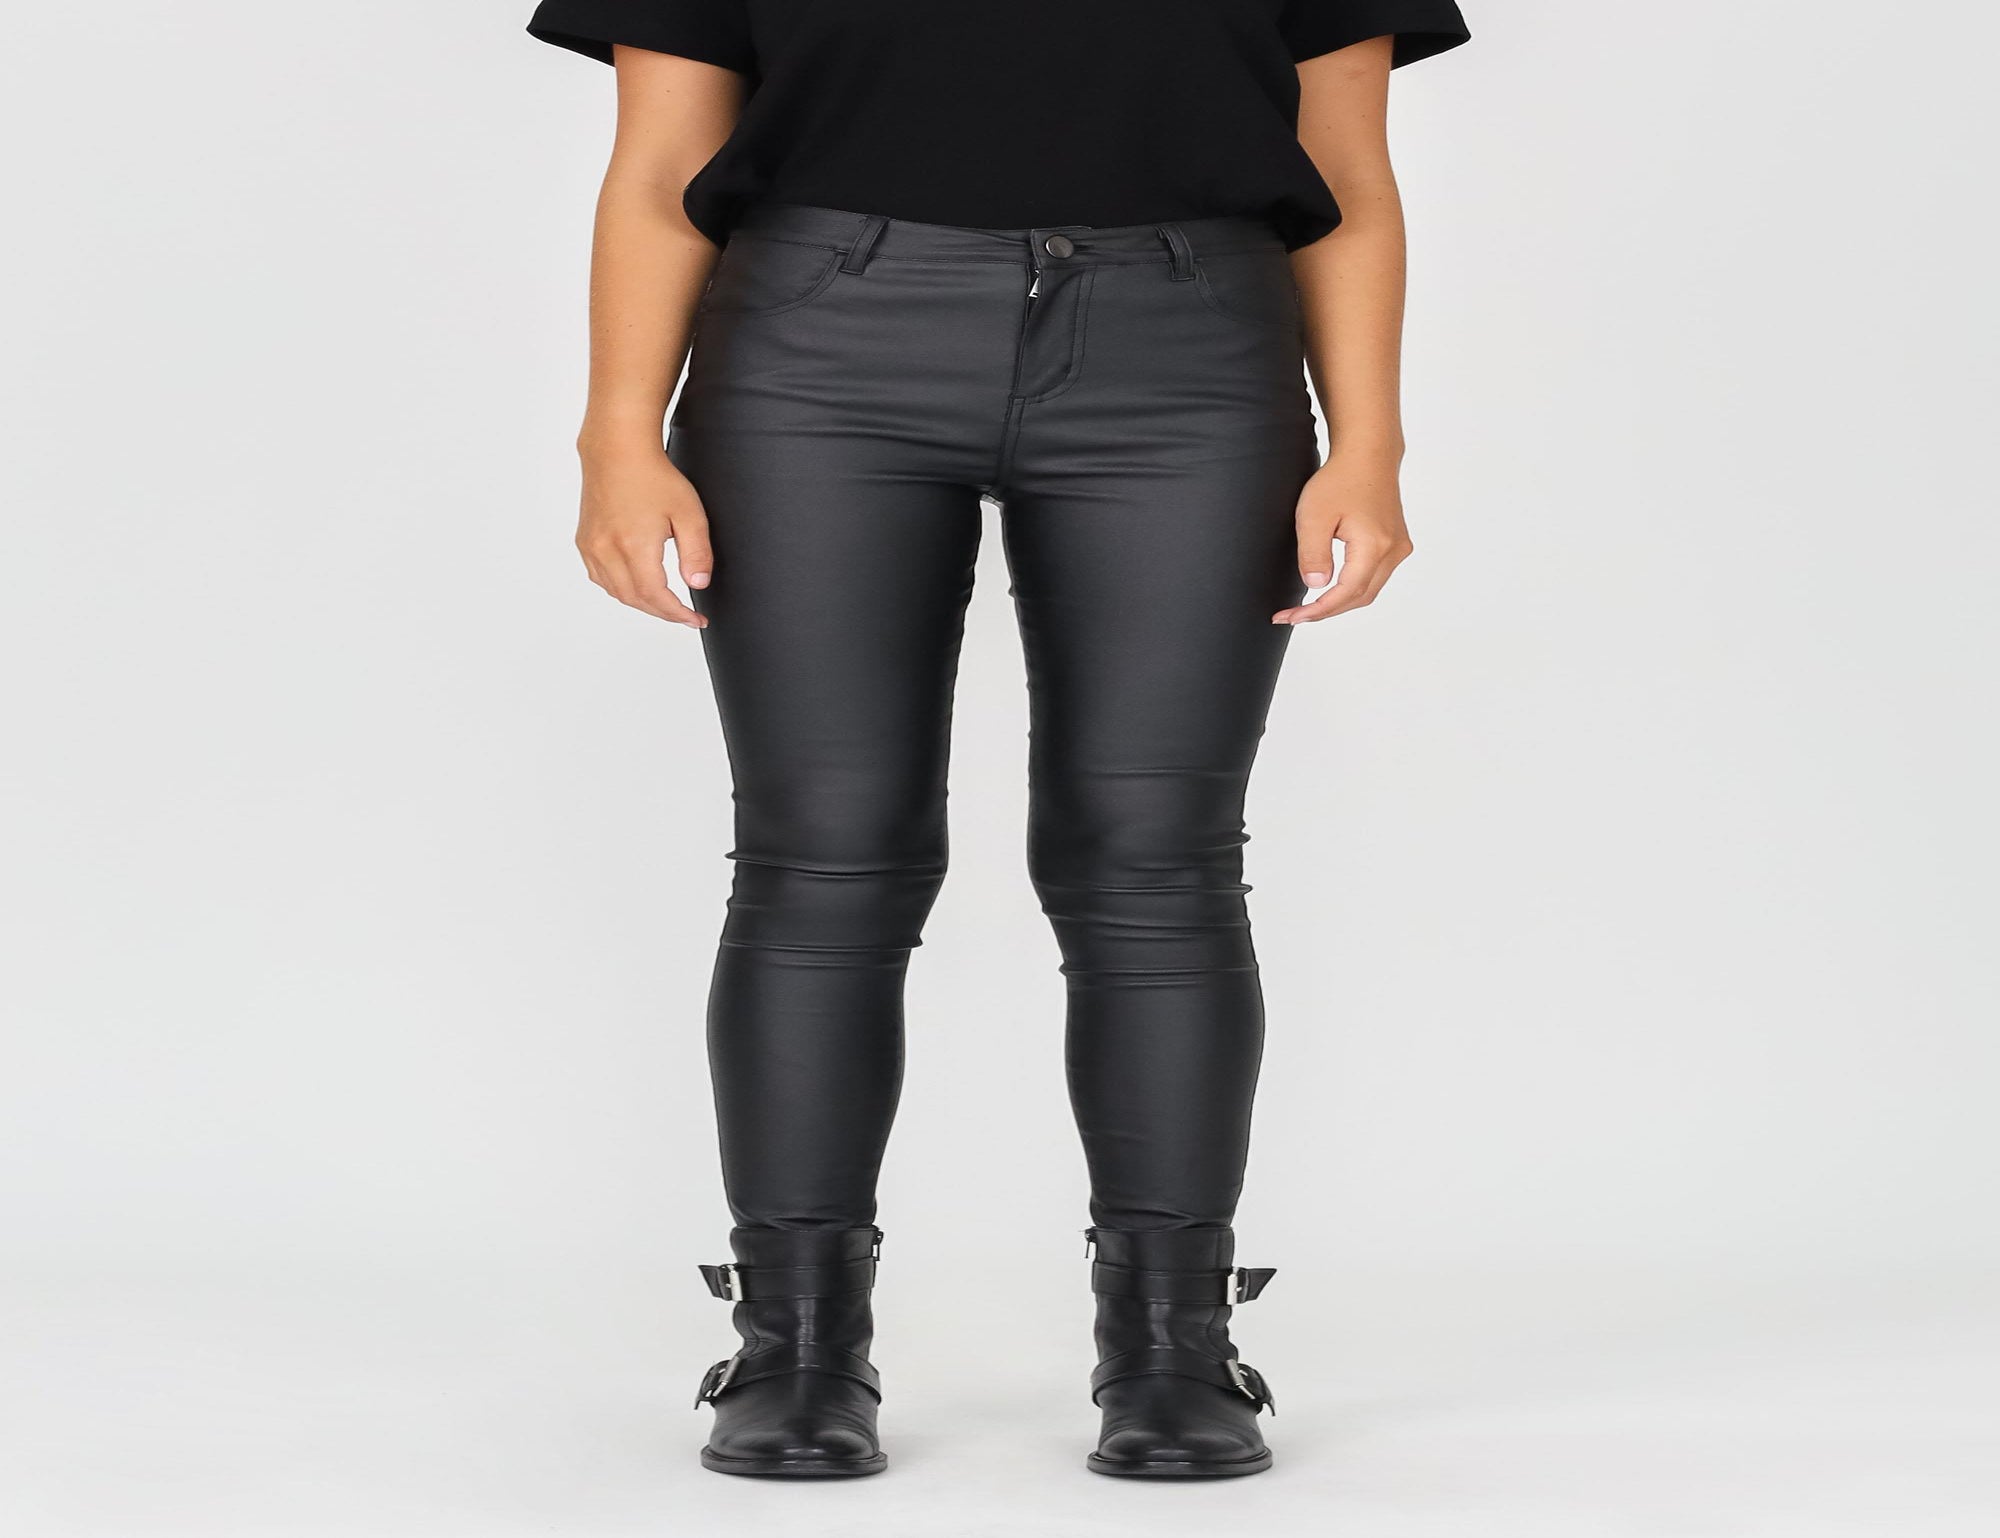 High Rise Leather Look Pant - Black - Pants - Full Length - Women's ...